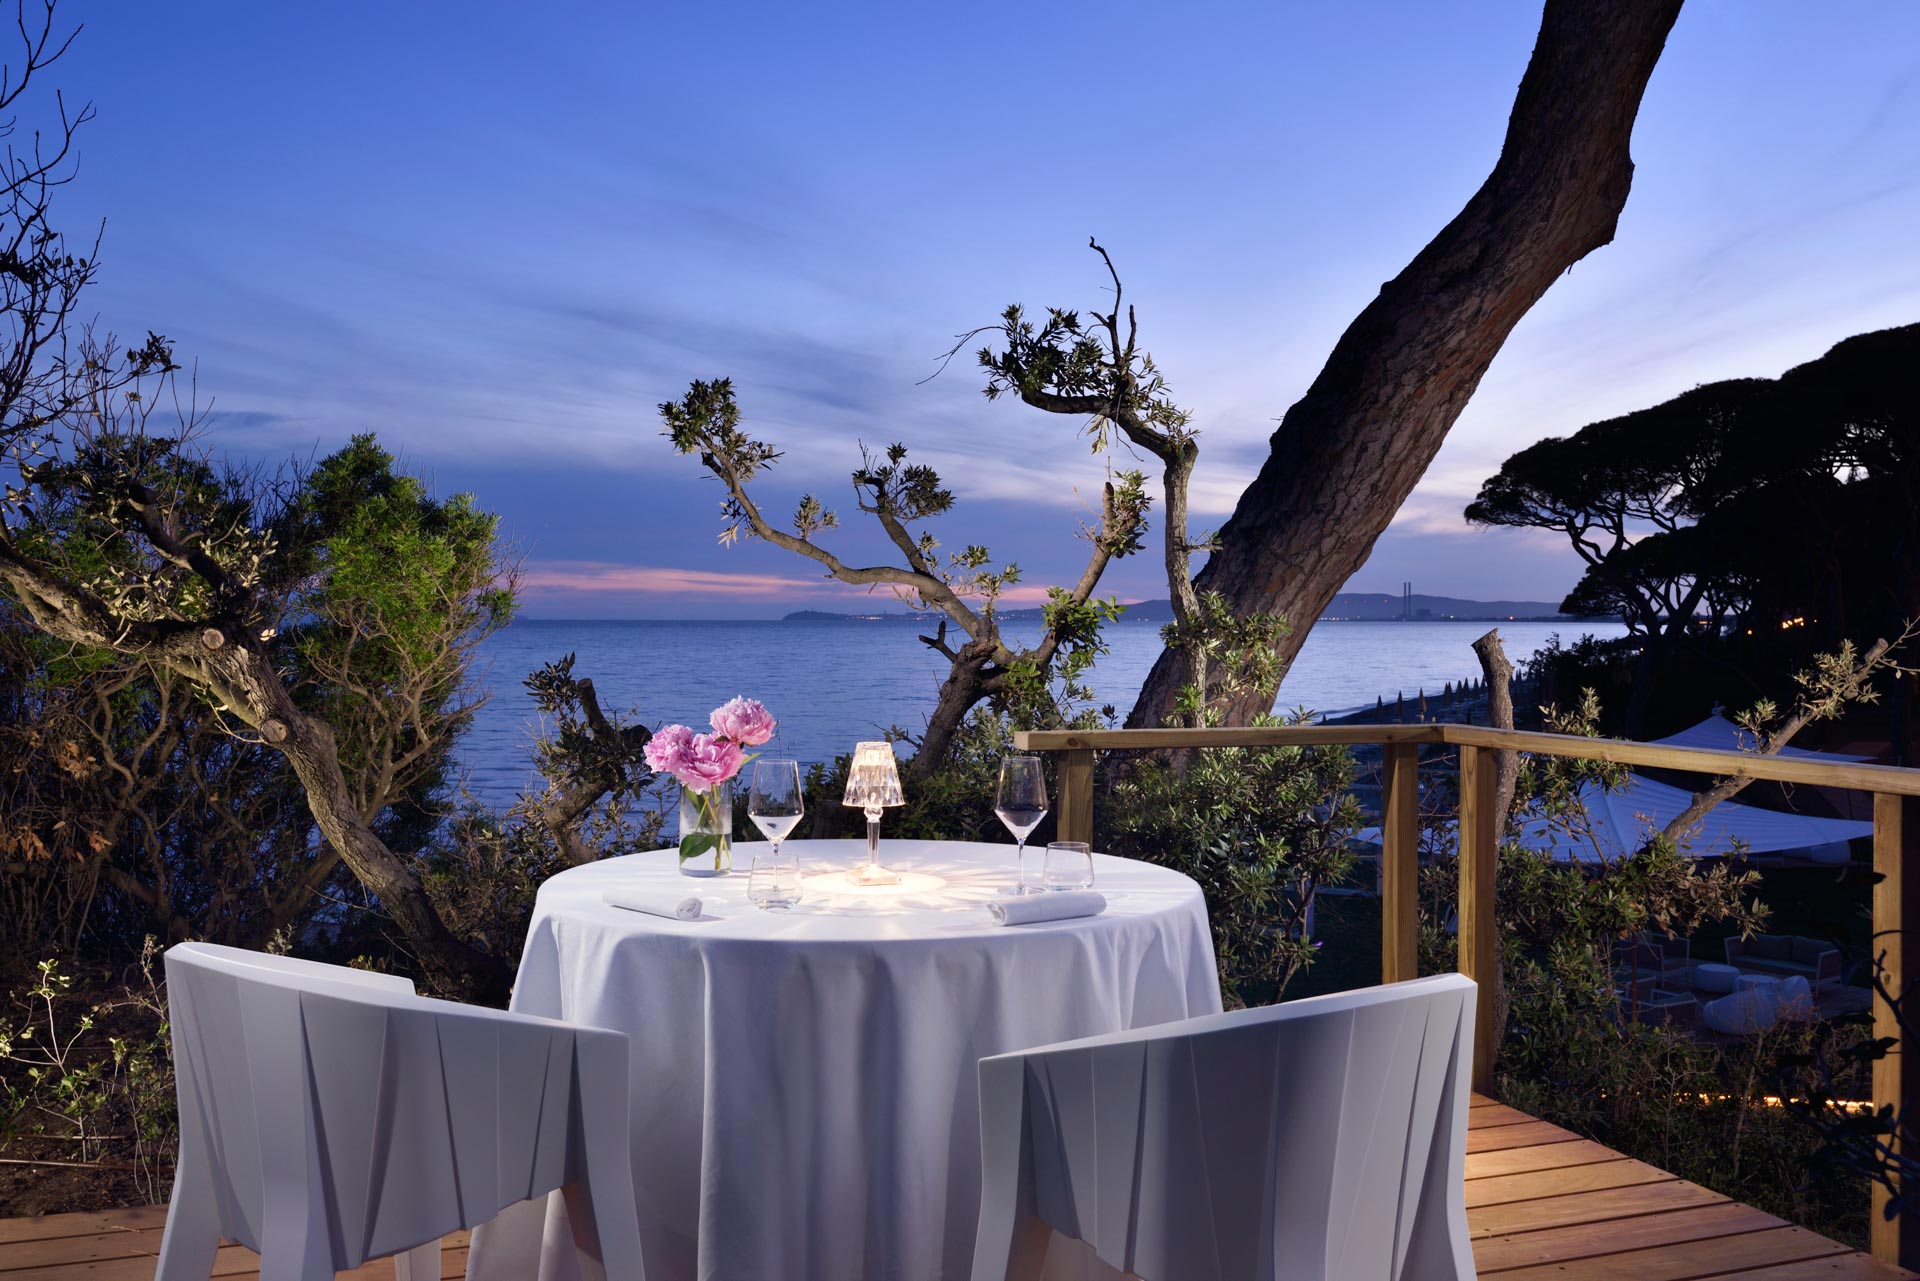 Romantic outdoor dining